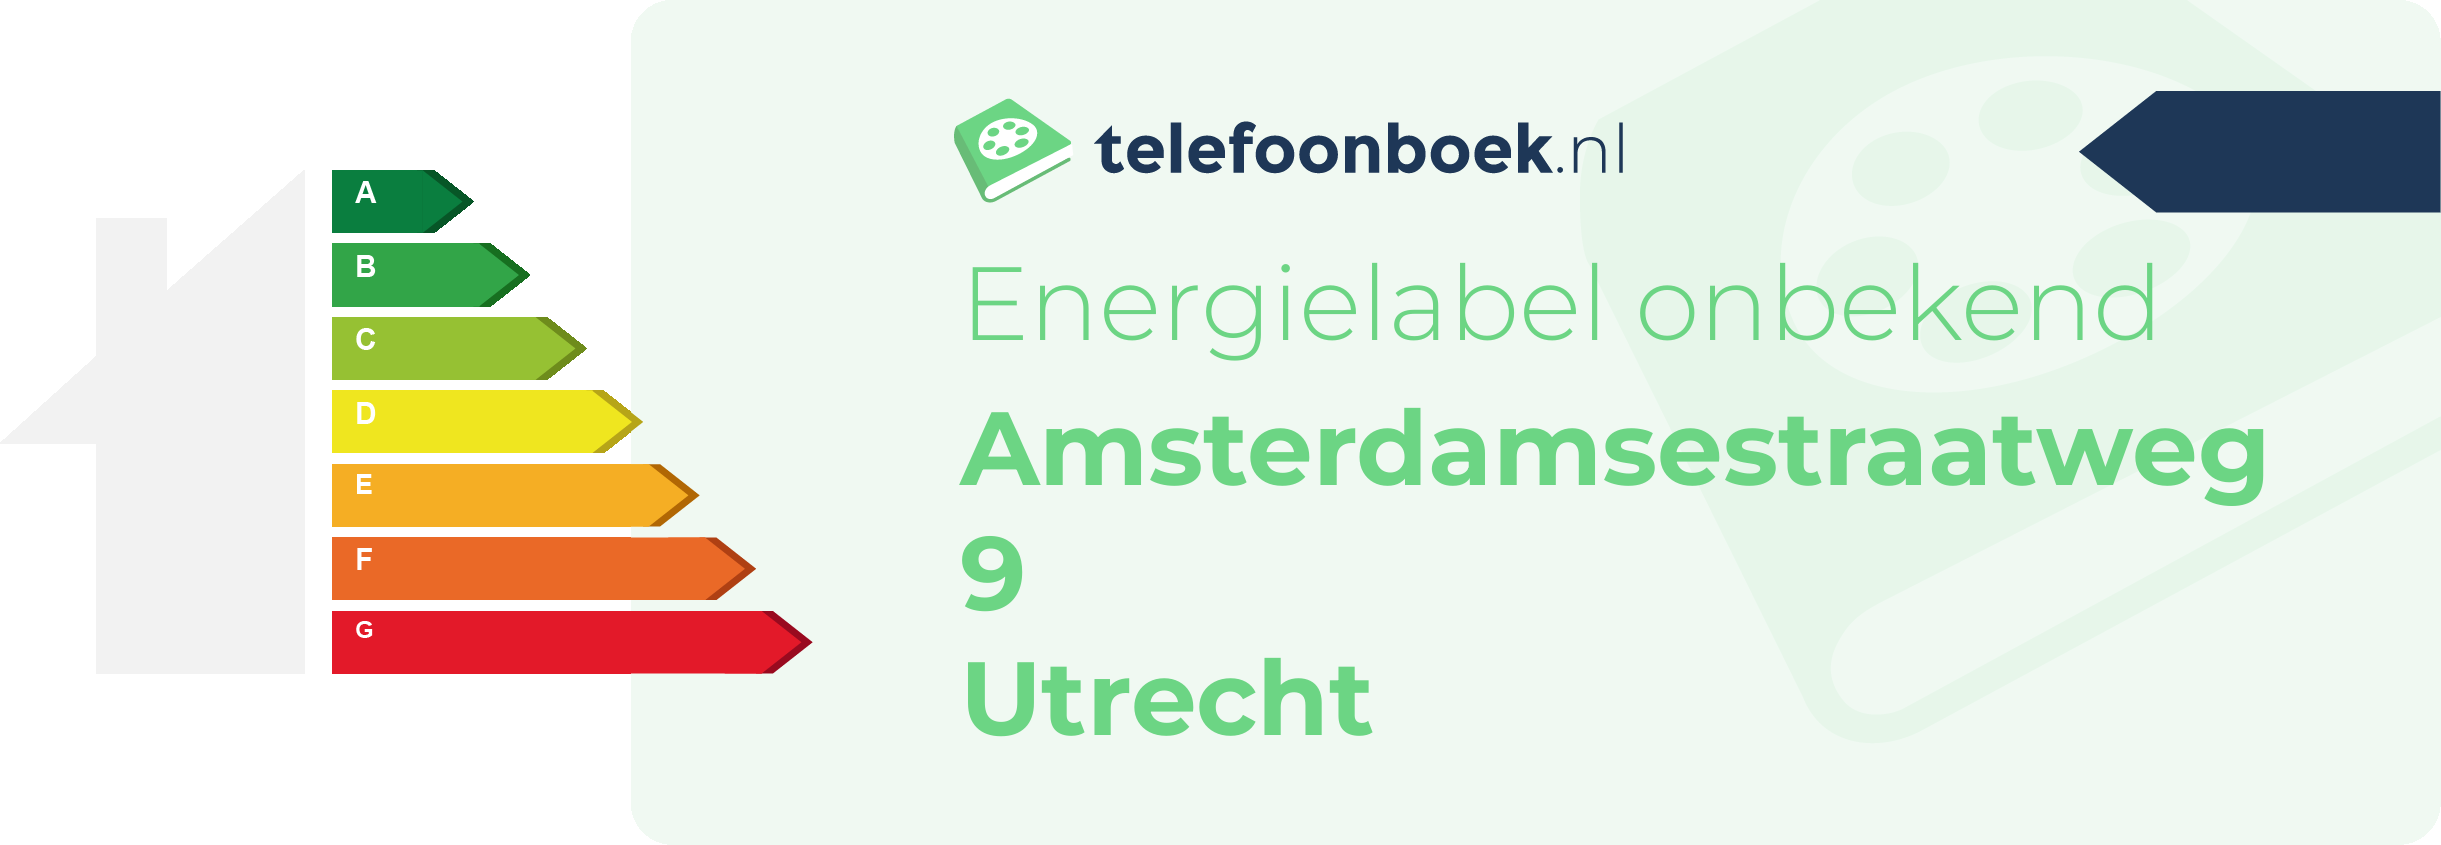 Energielabel Amsterdamsestraatweg 9 Utrecht